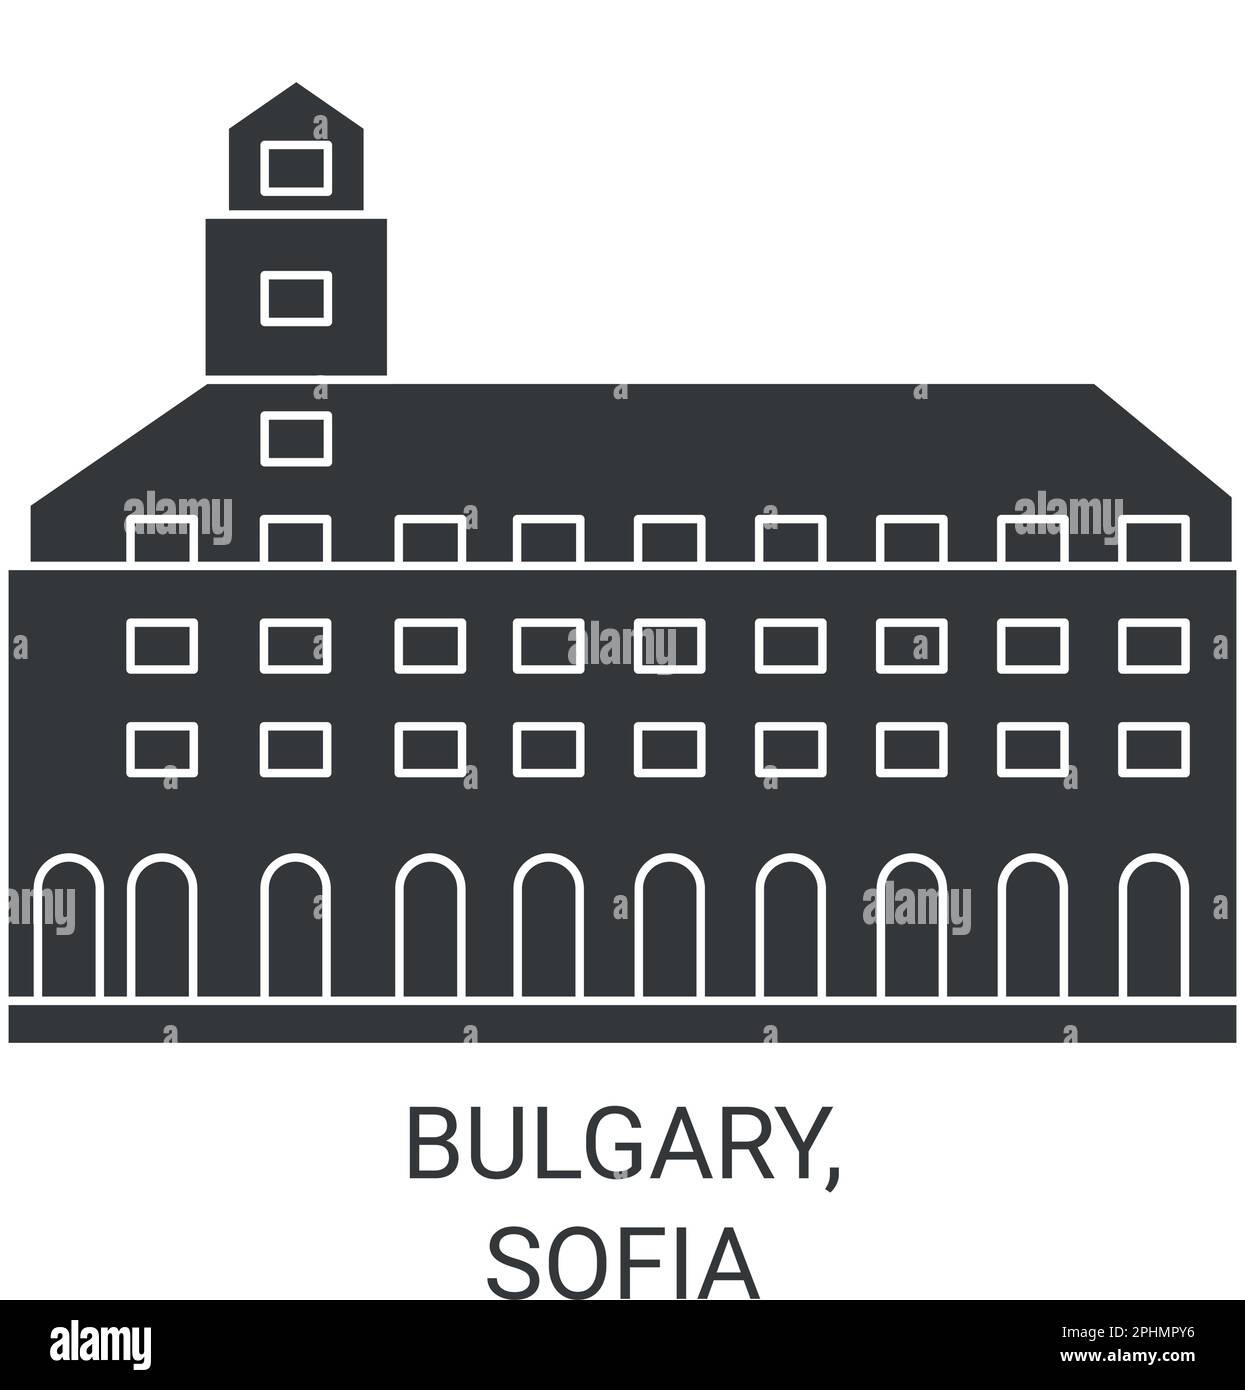 Bulgary, Sofia viaggio punto di riferimento vettoriale illustrazione Illustrazione Vettoriale